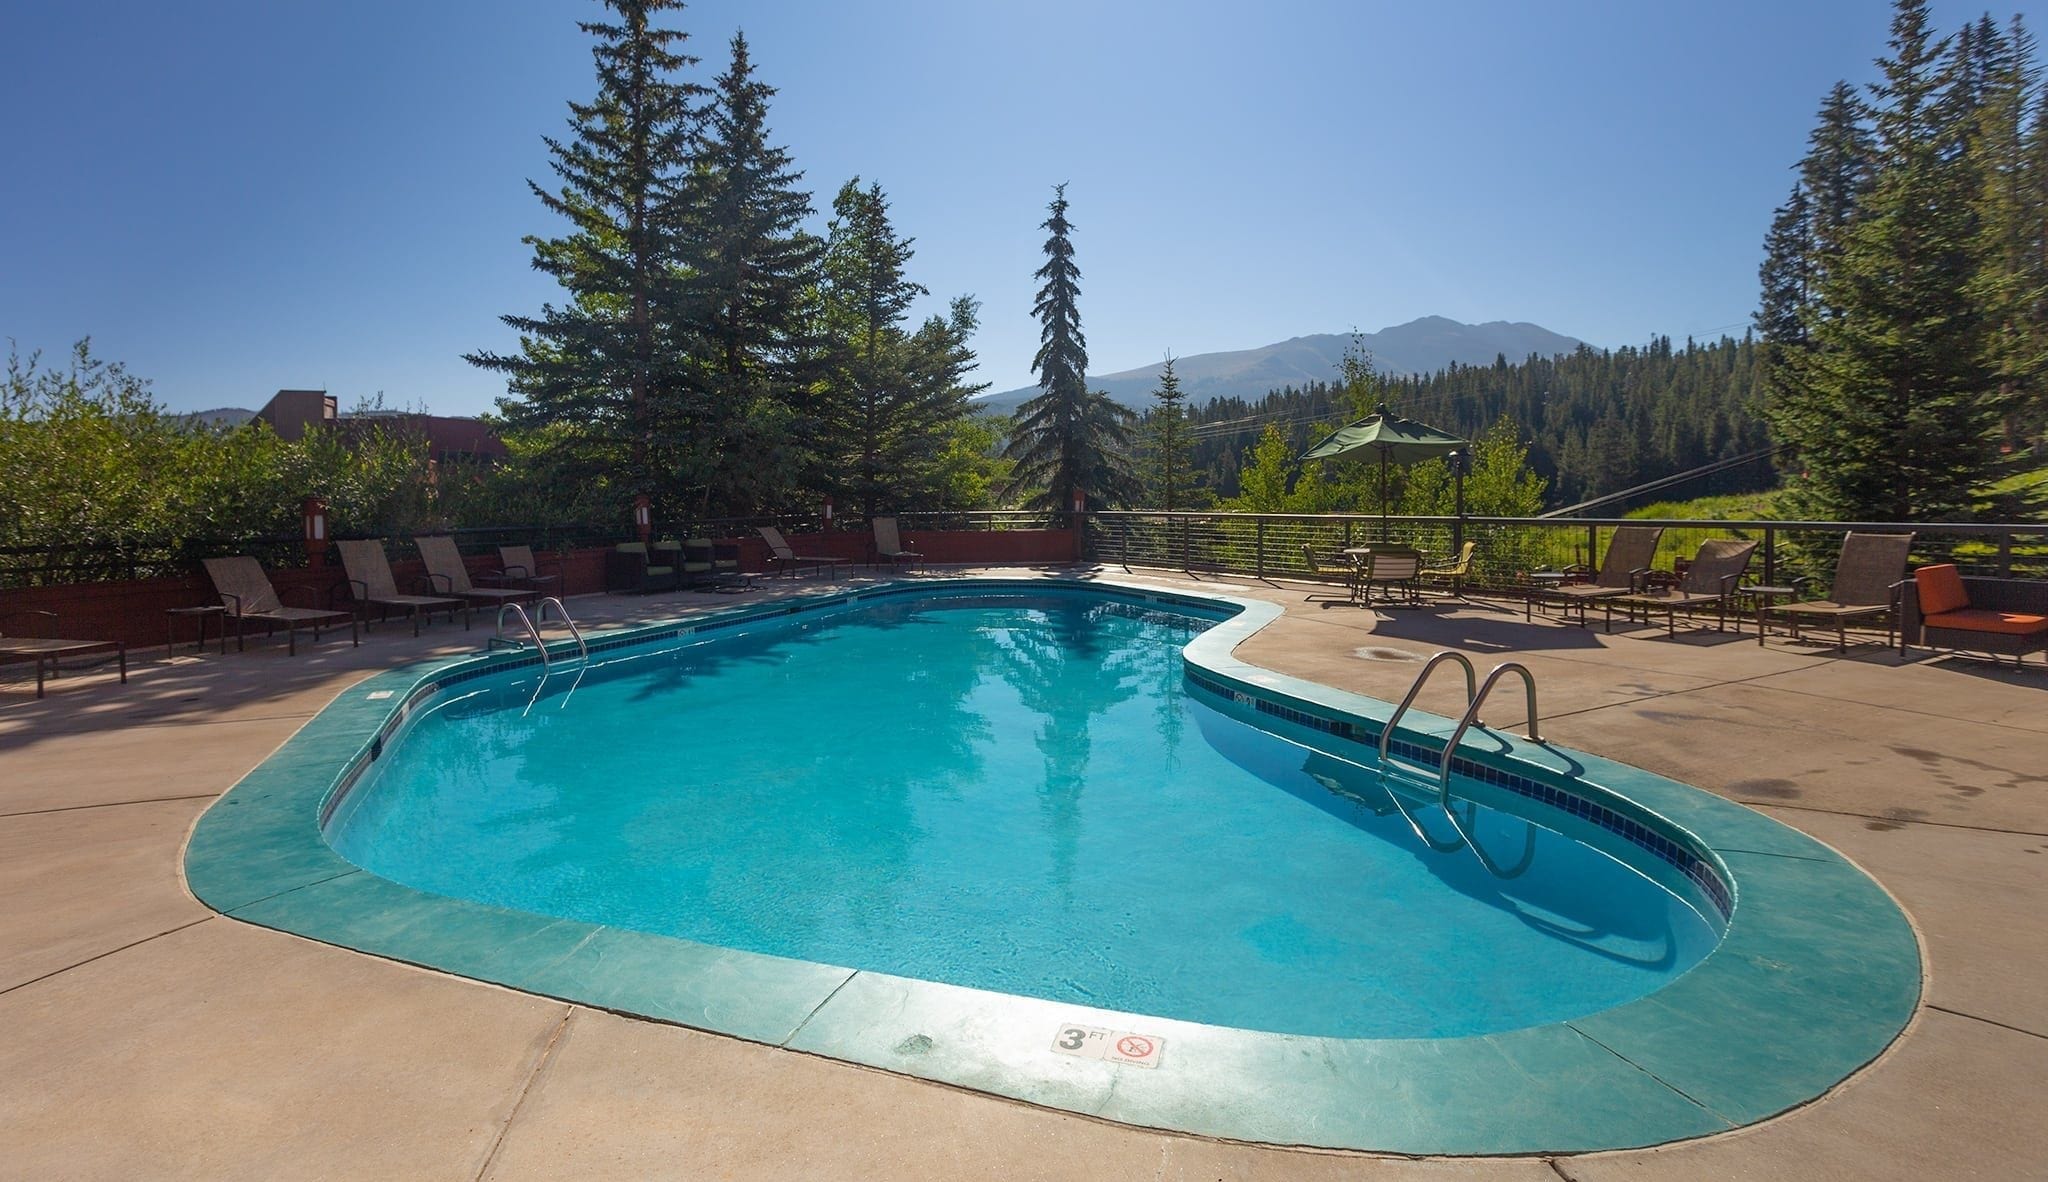 The pool area for Building 4 at Beaver Run Resort in Breckenridge